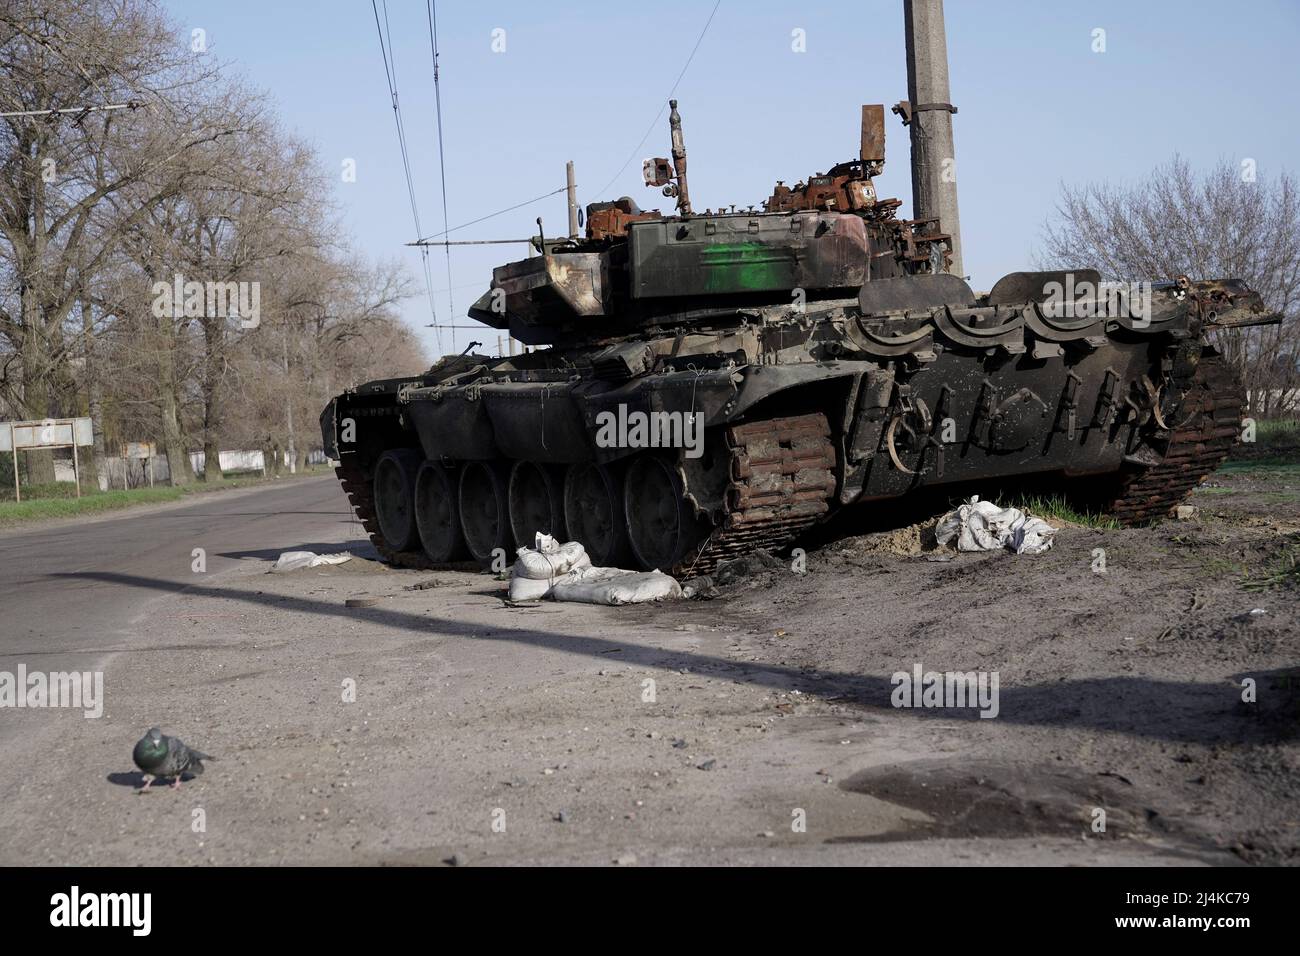 SUMY, UKRAINE - APRIL 15, 2022 - A destroyed Russian tank is pictured in Sumy, northeastern Ukraine. Photo by Anna Voitenko/Ukrinform/ABACAPRESS.COM Stock Photo